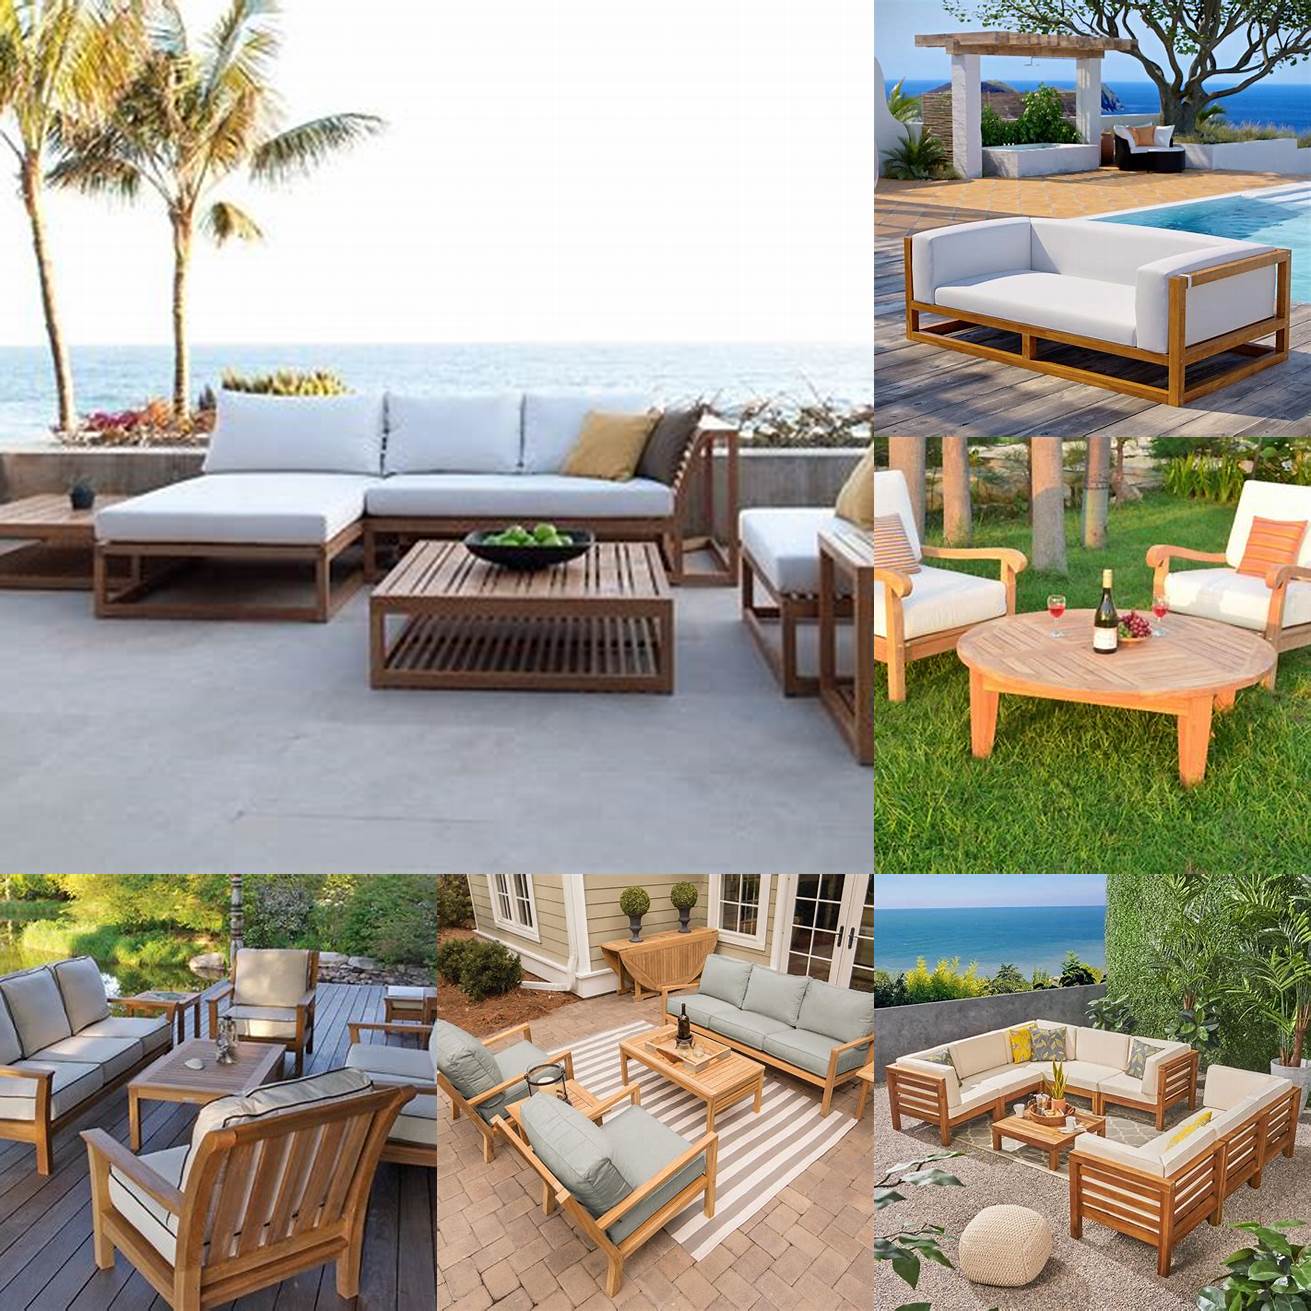 A teak platform outdoor furniture set with a view